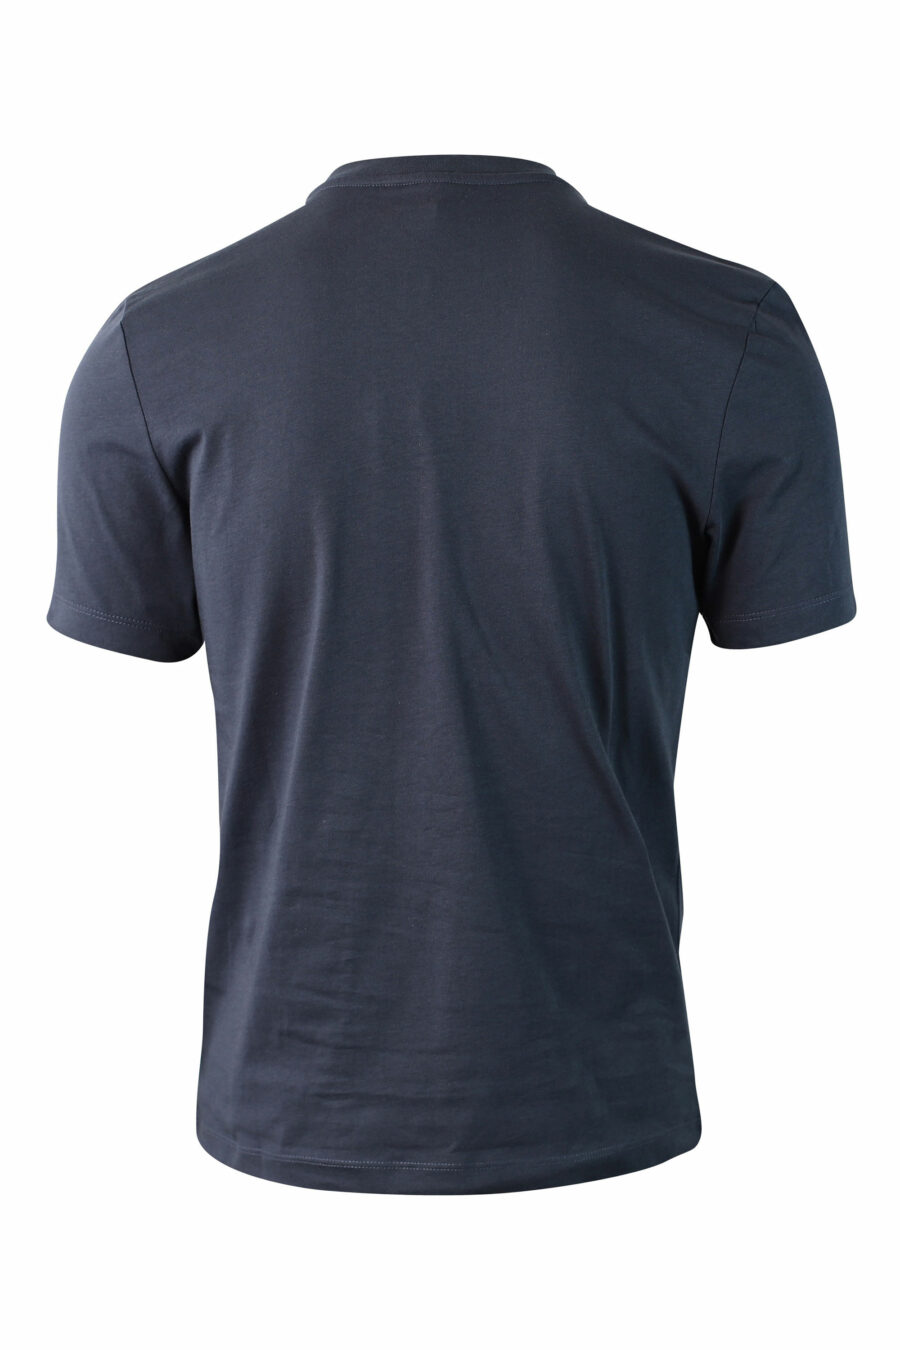 T-shirt bleu avec maxilogo monochrome - IMG 0045